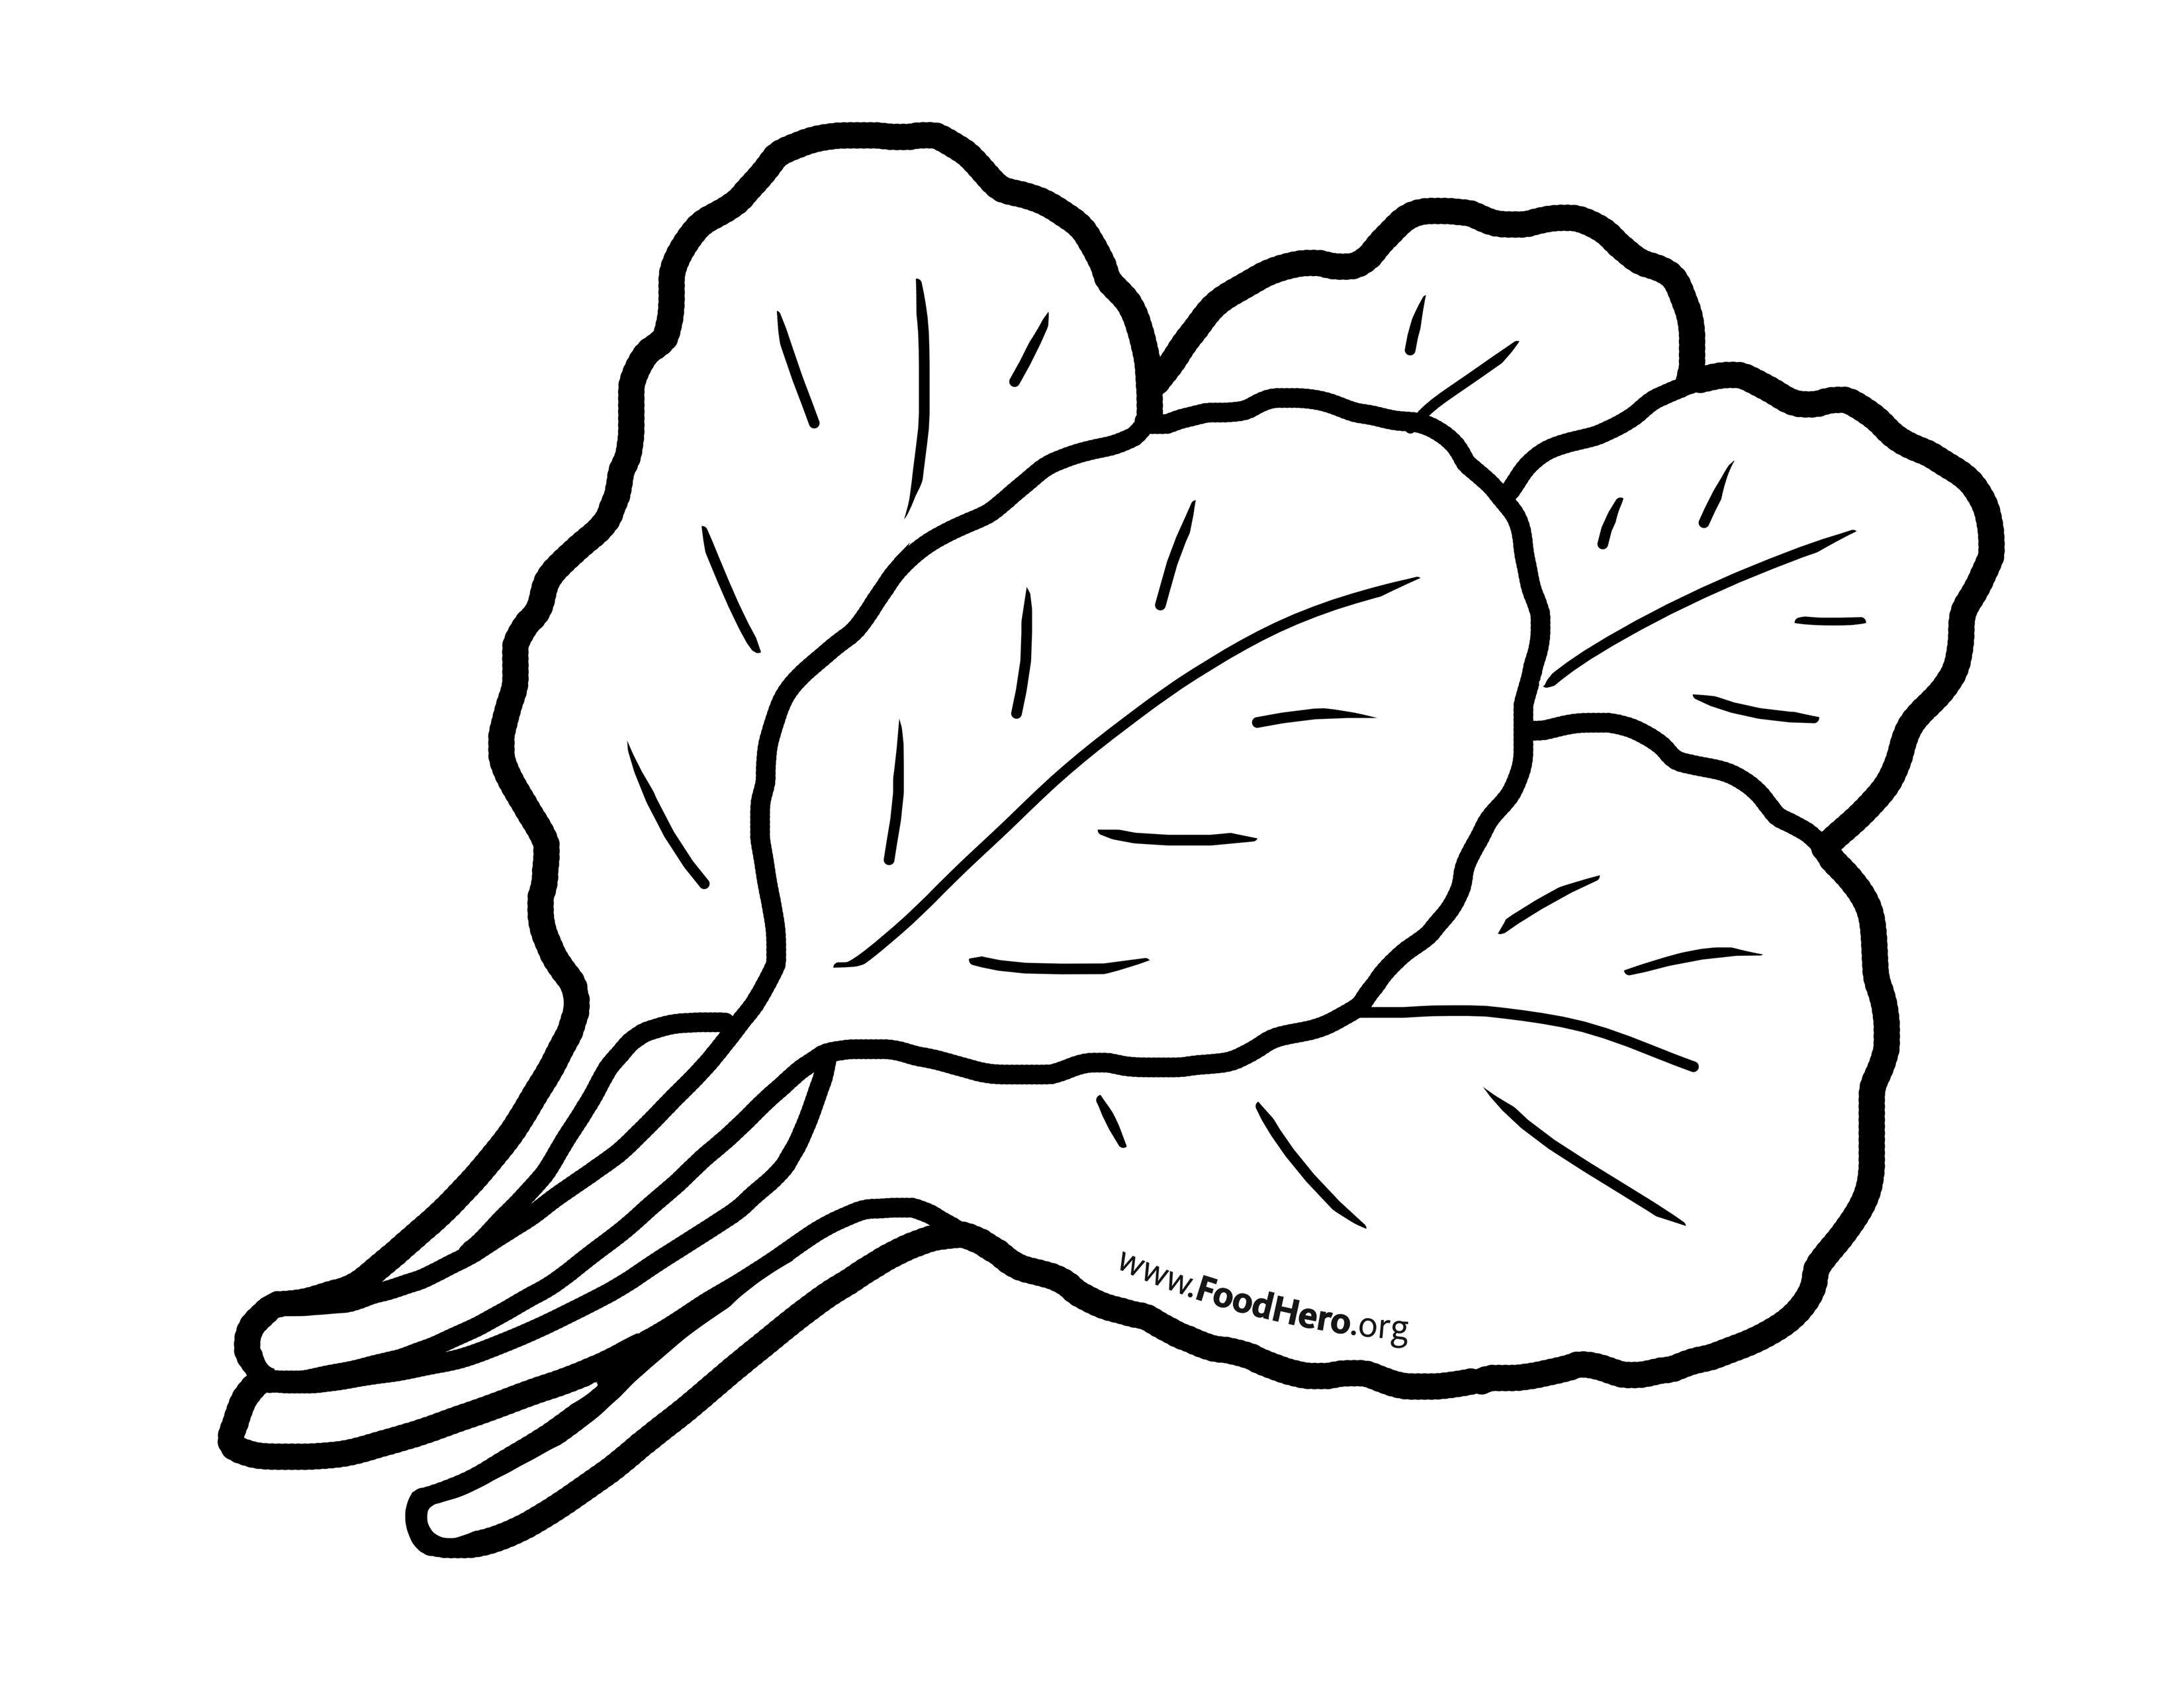 Lettuce clipart dark green vegetable. Chollard greens illustration foodhero